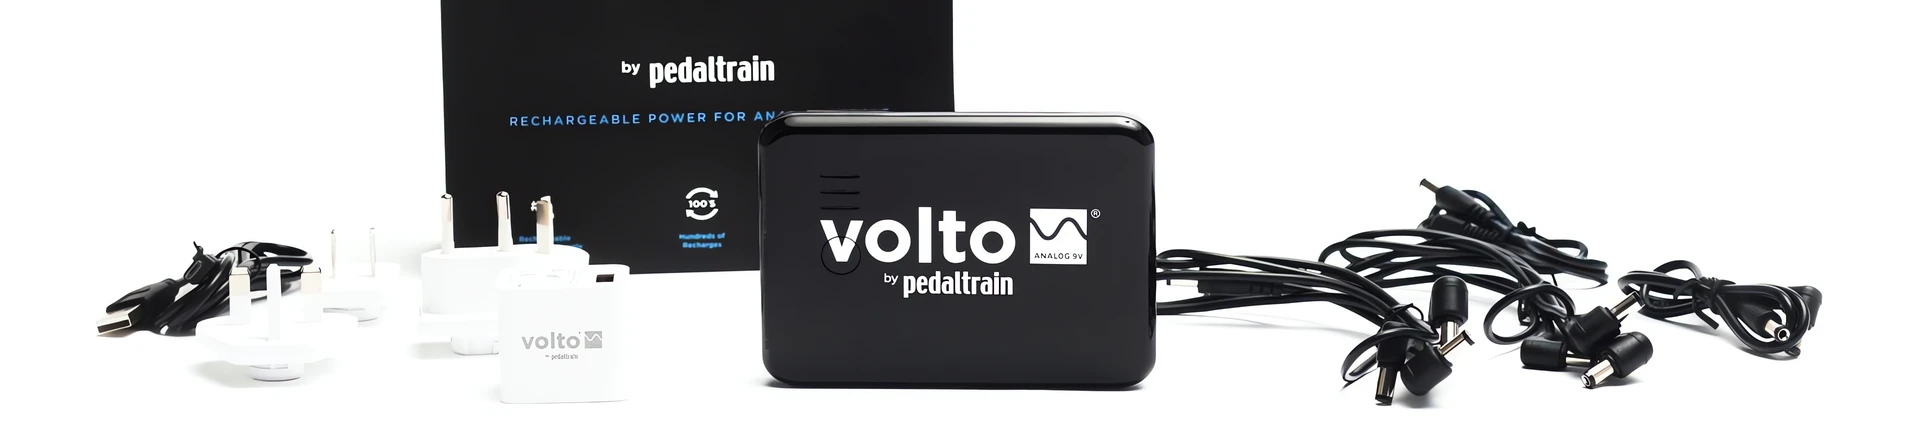 Volto 2 - Nowa wersja zasilacza od Pedaltrain 